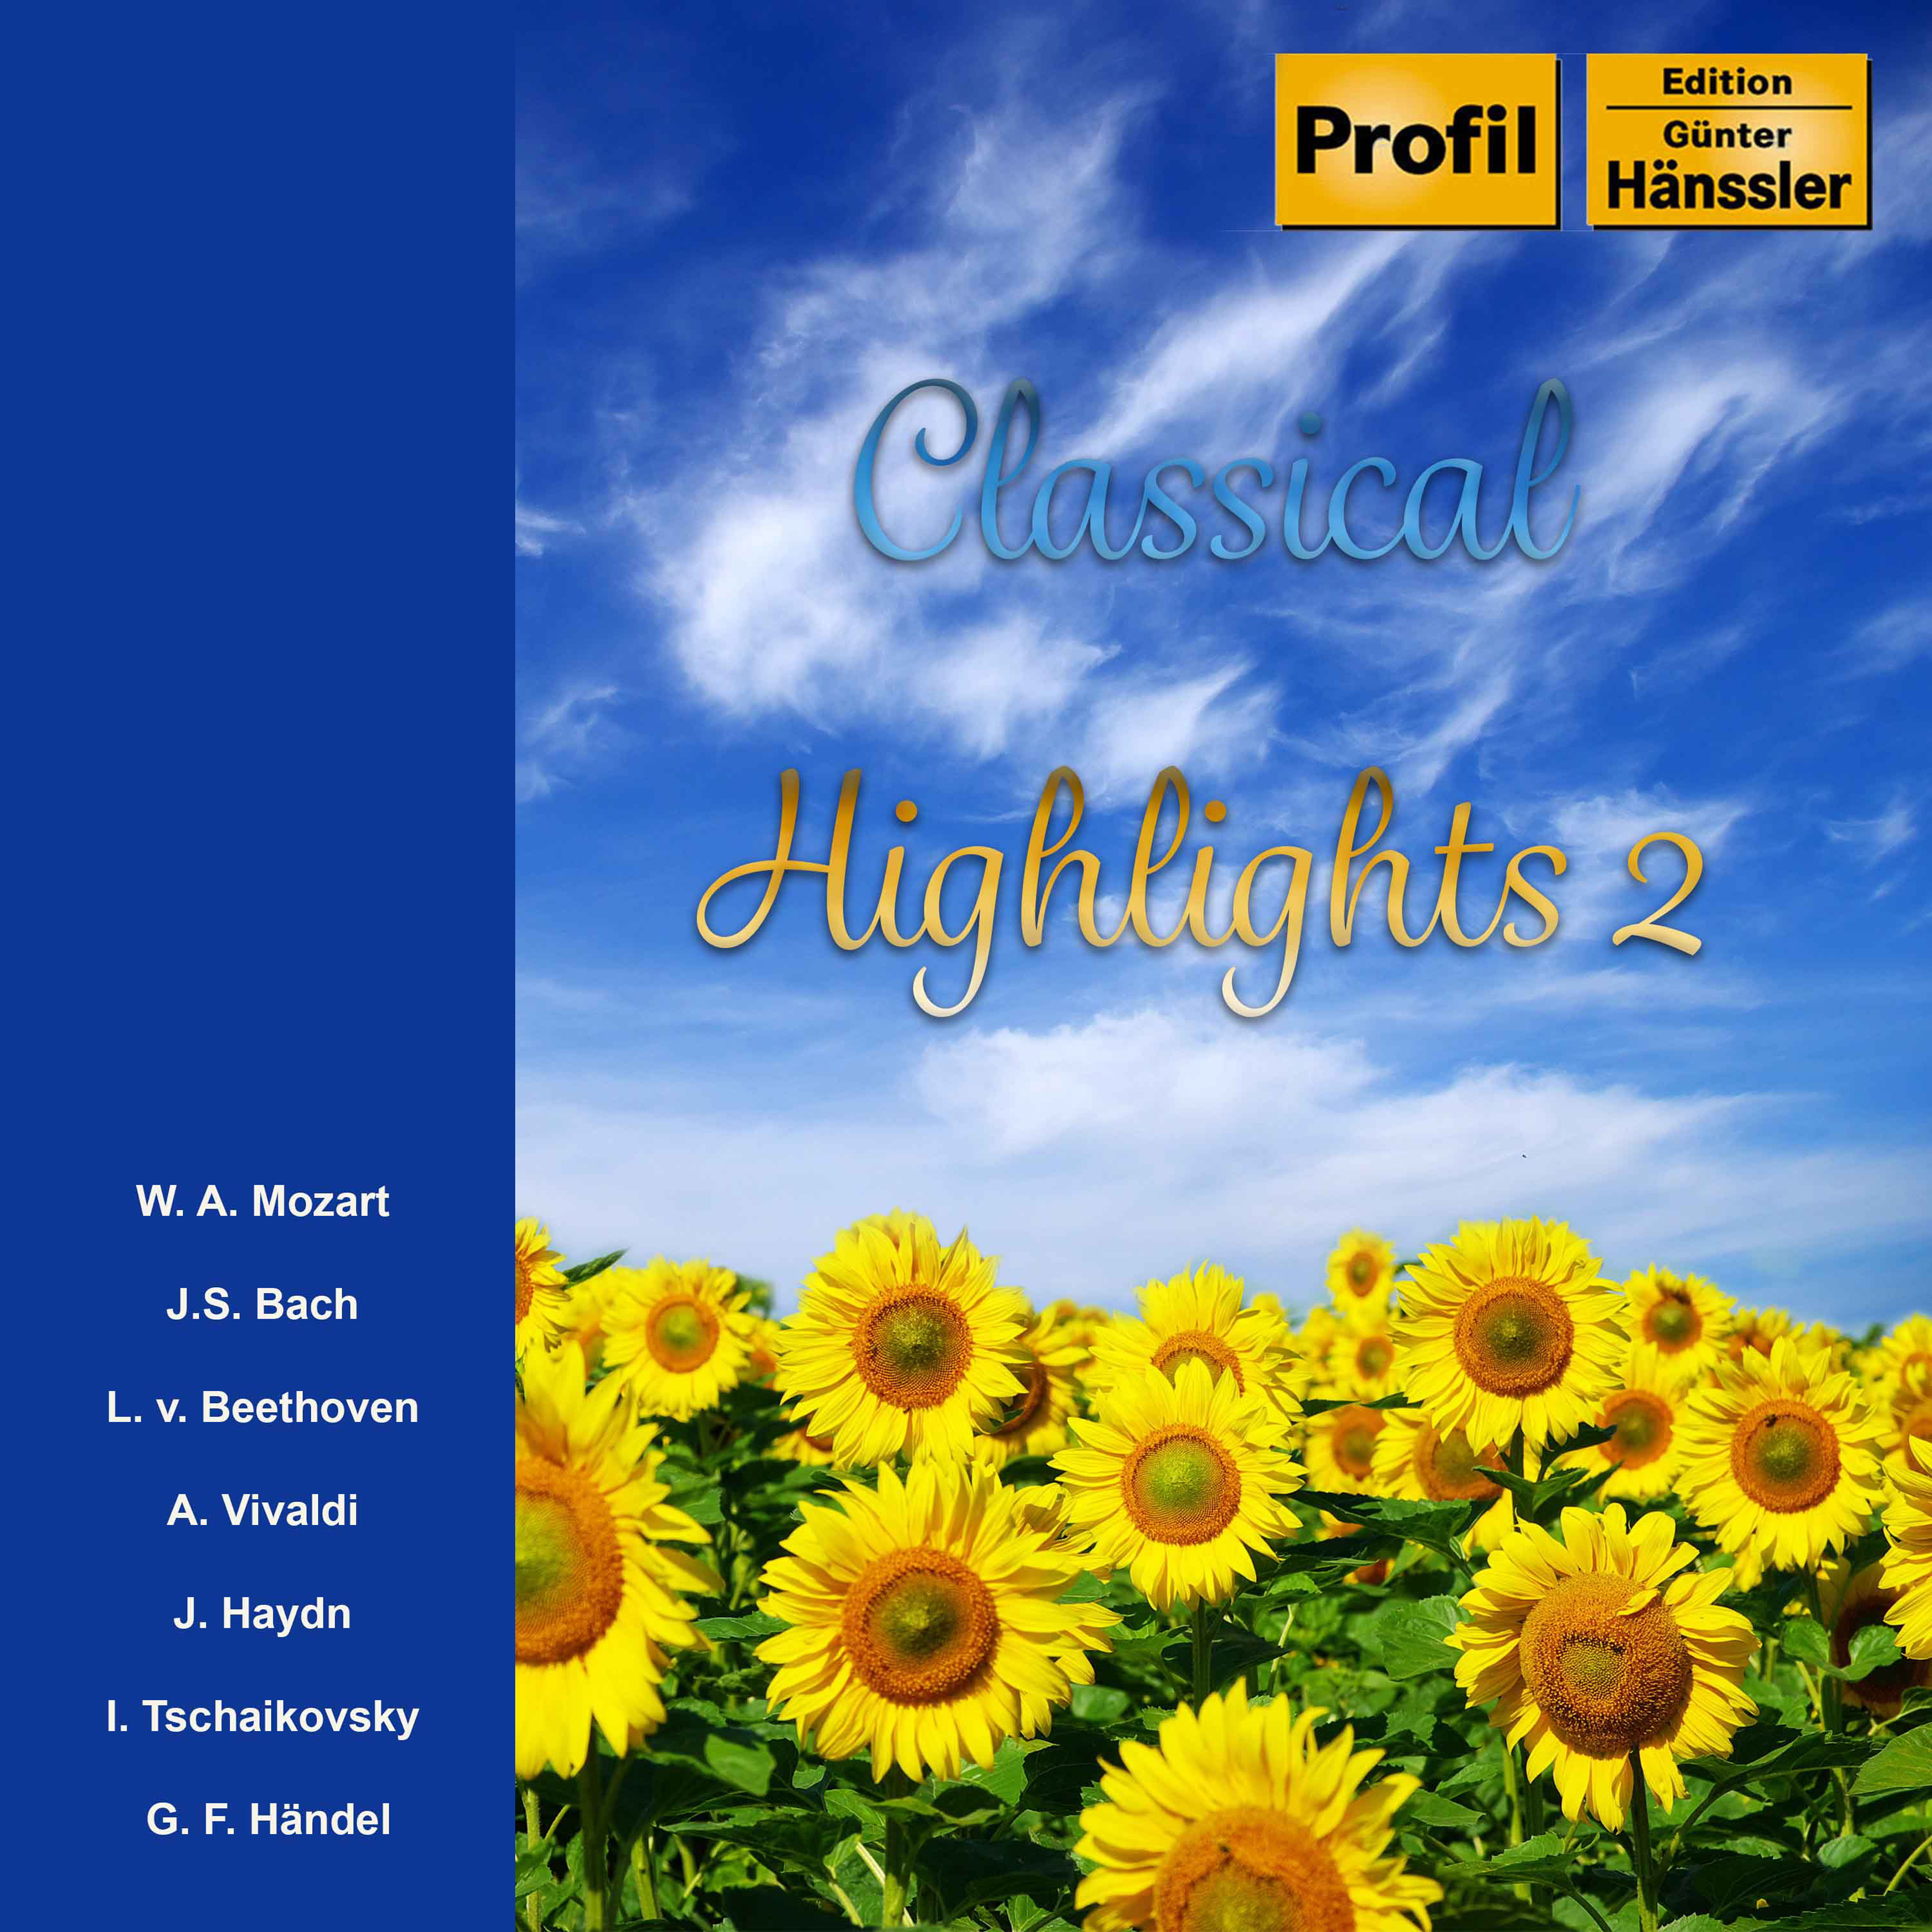 Piano Sonata No. 8 in C Minor, Op. 13 " Pathe tique": II. Adagio cantabile